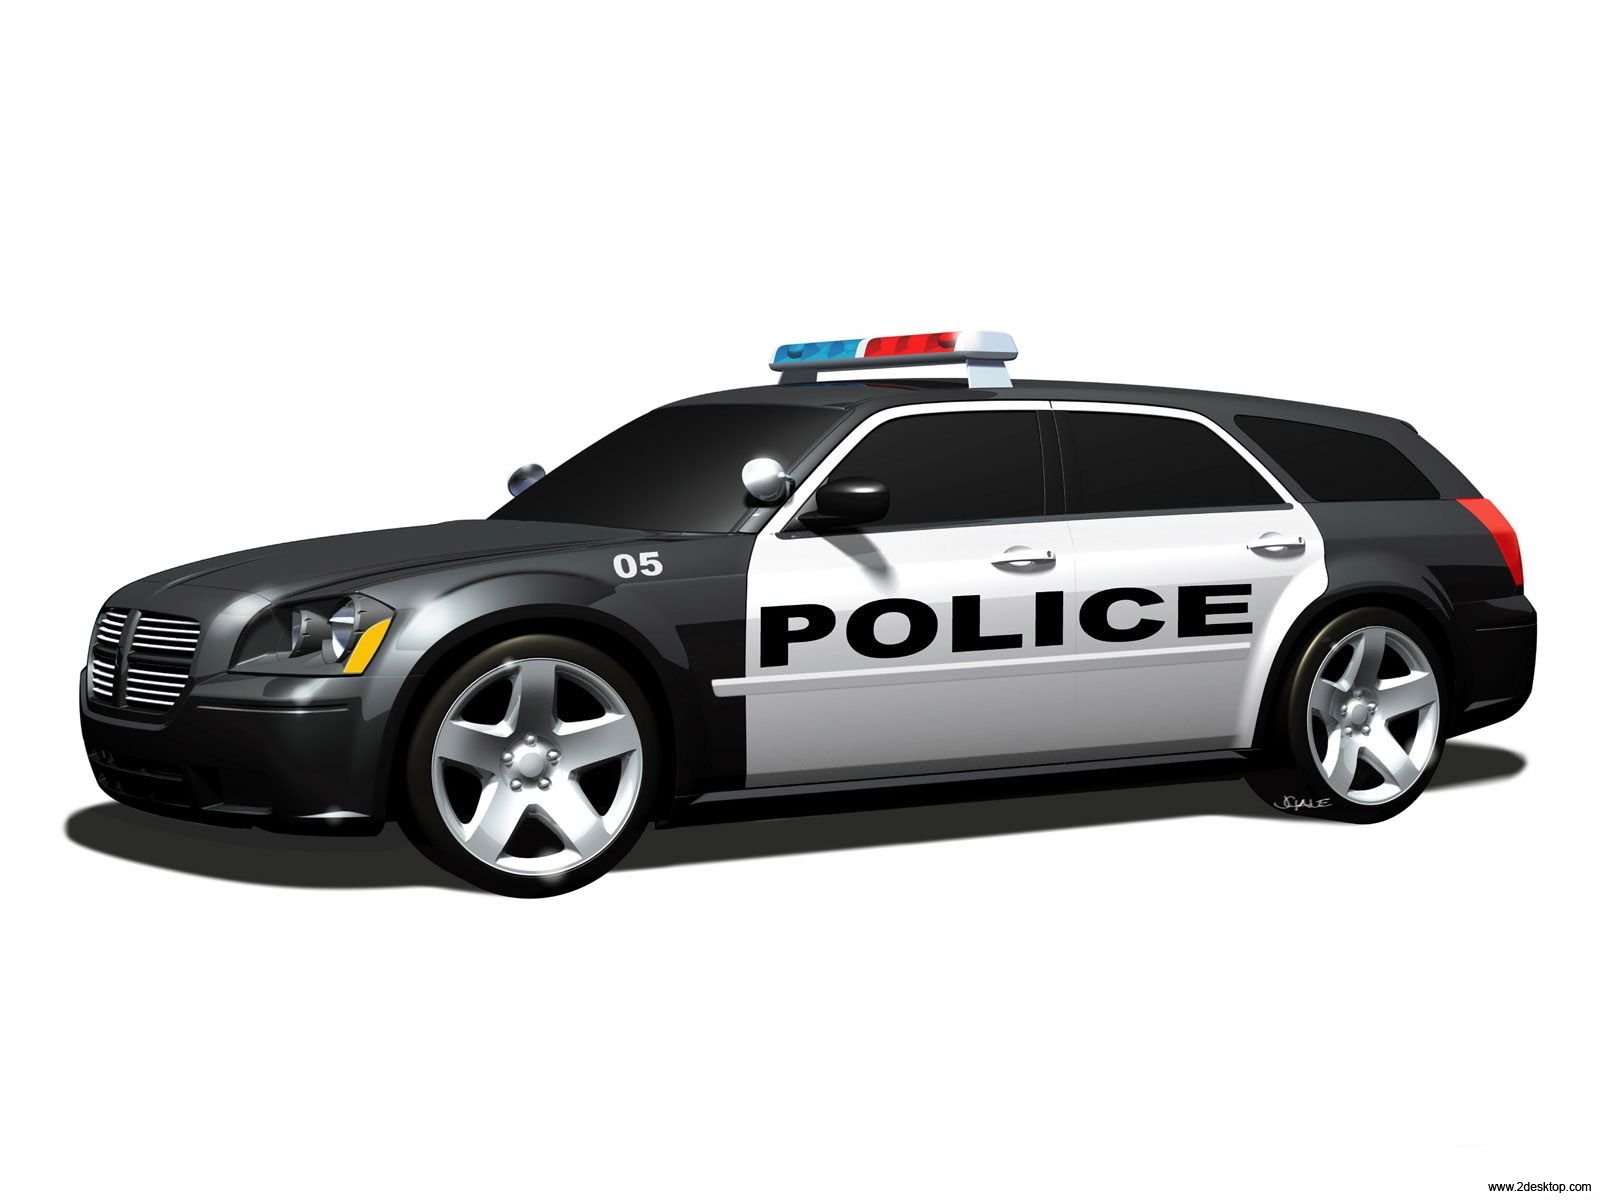 Police Car   Free Images At Clker Com   Vector Clip Art Online    